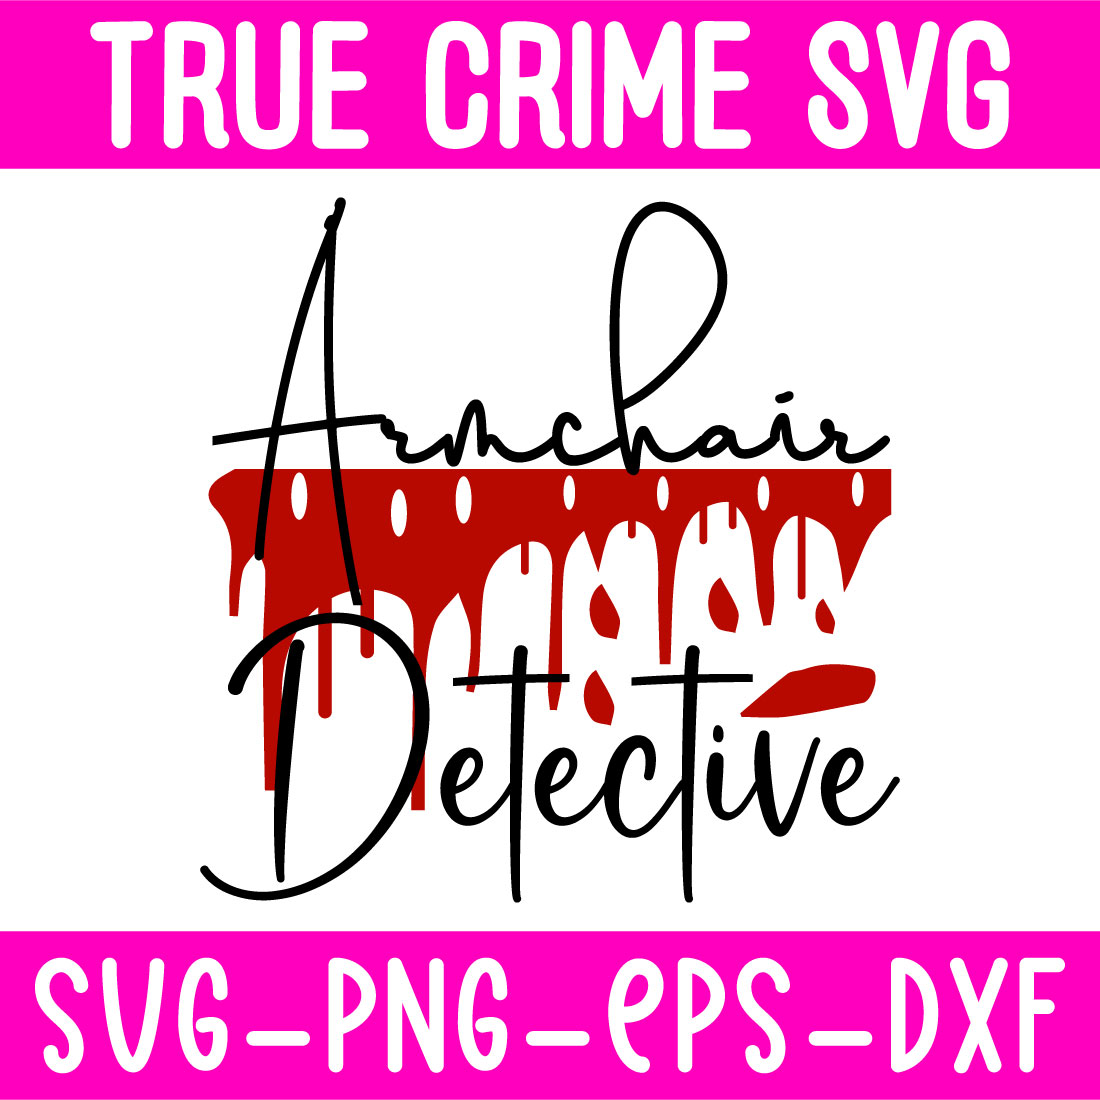 True Crime Svg preview image.